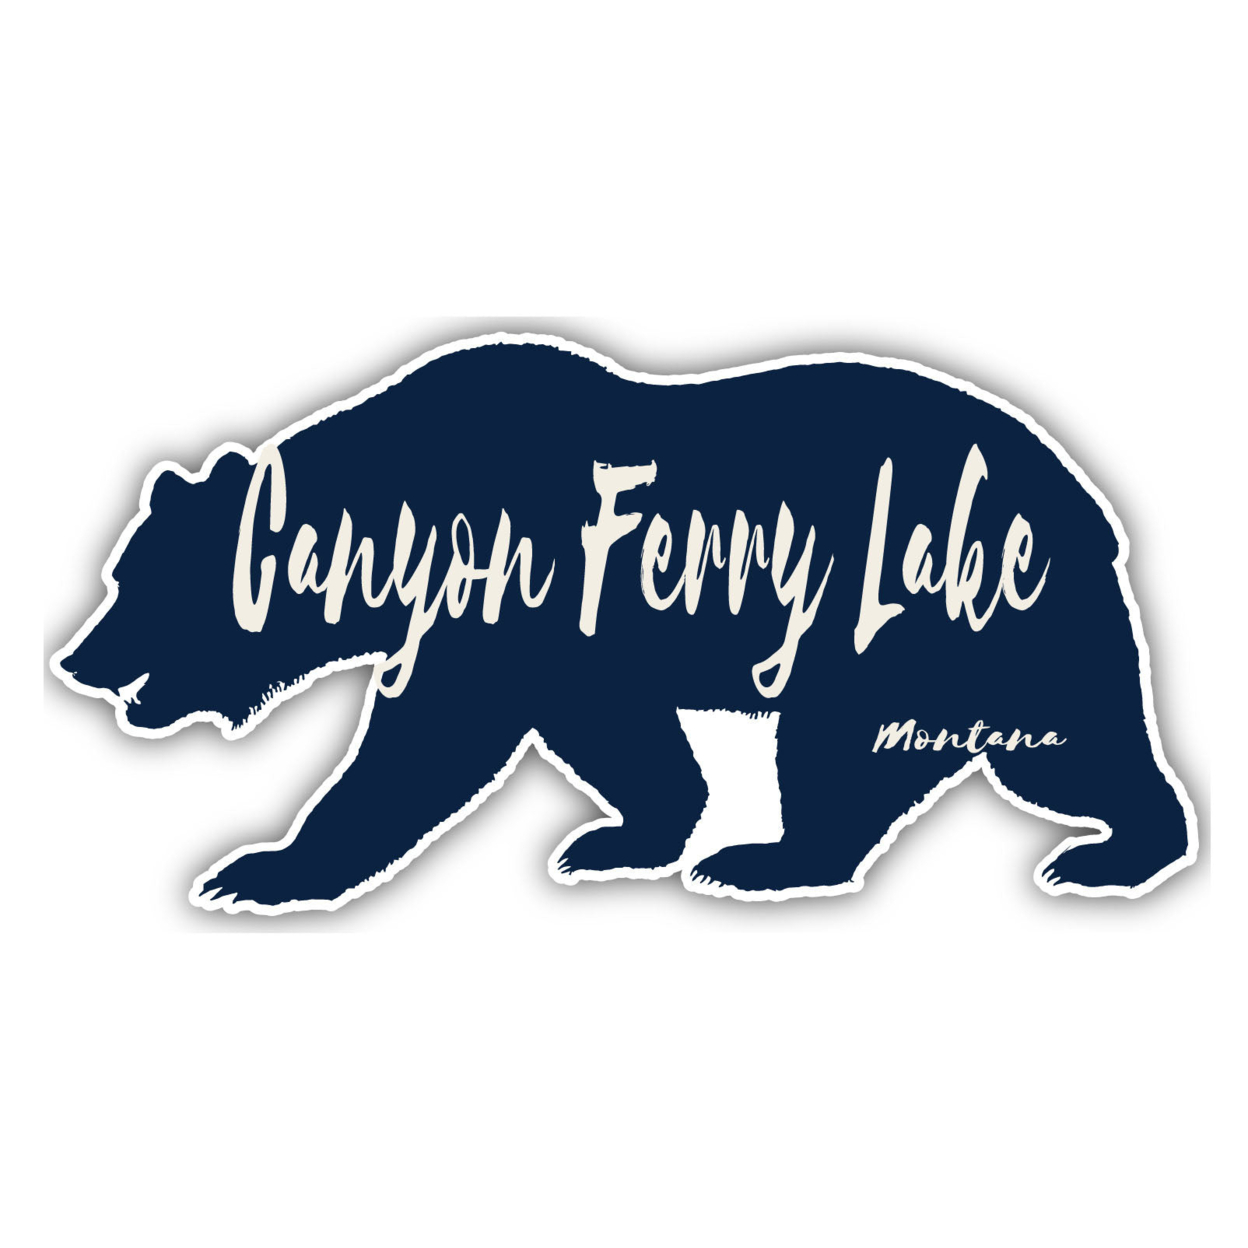 Canyon Ferry Lake Montana Souvenir Decorative Stickers (Choose Theme And Size) - 4-Pack, 8-Inch, Bear